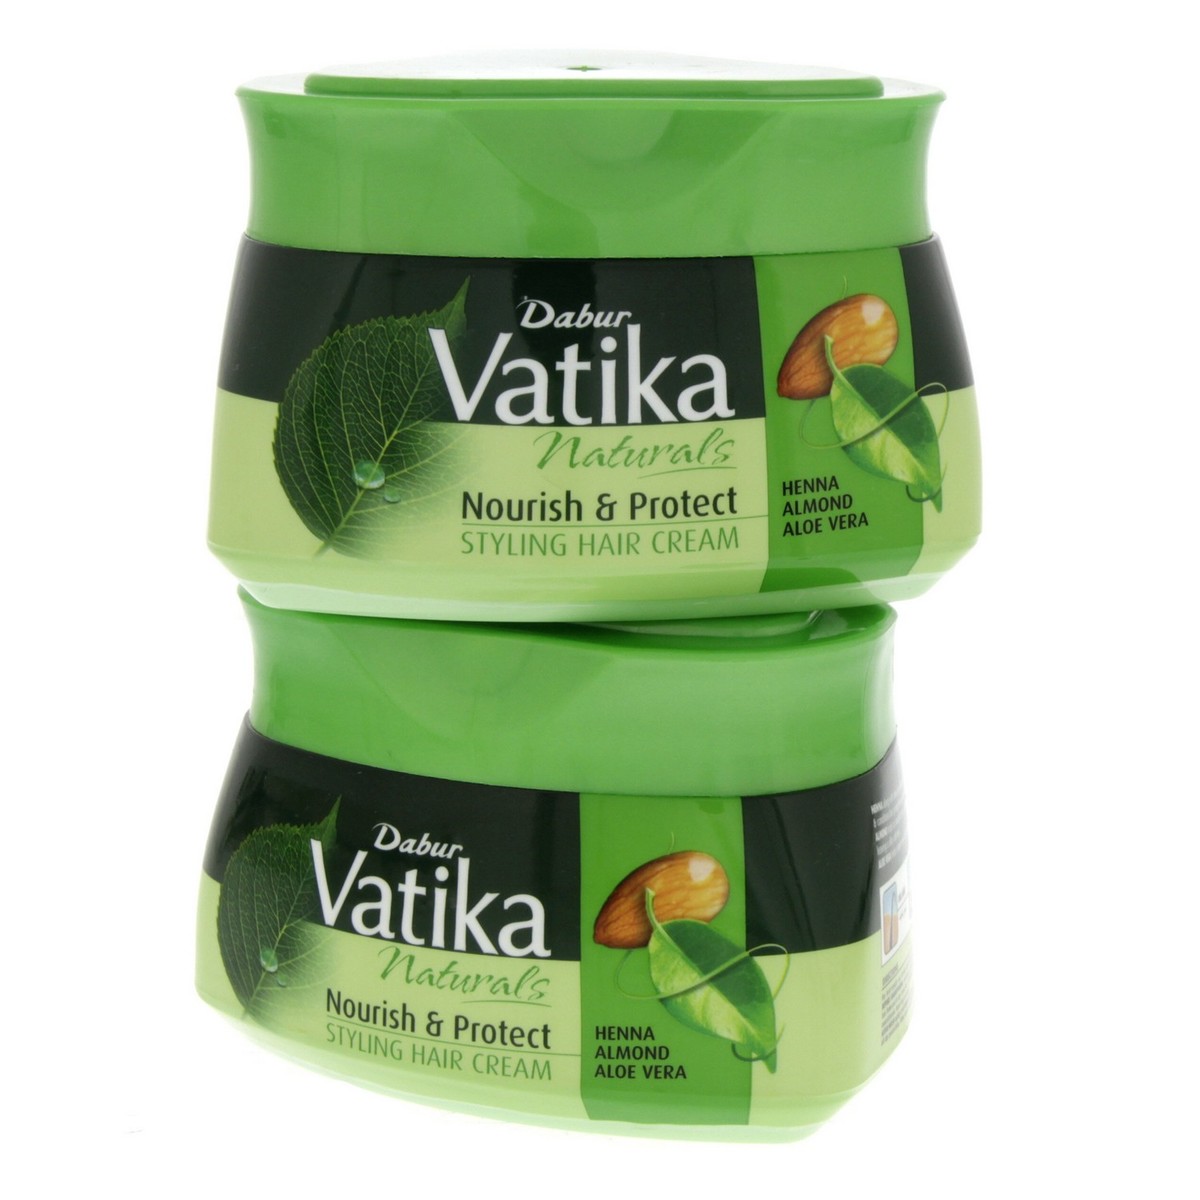 Dabur Vatika Naturals Dandruff Guard Styling Hair Cream